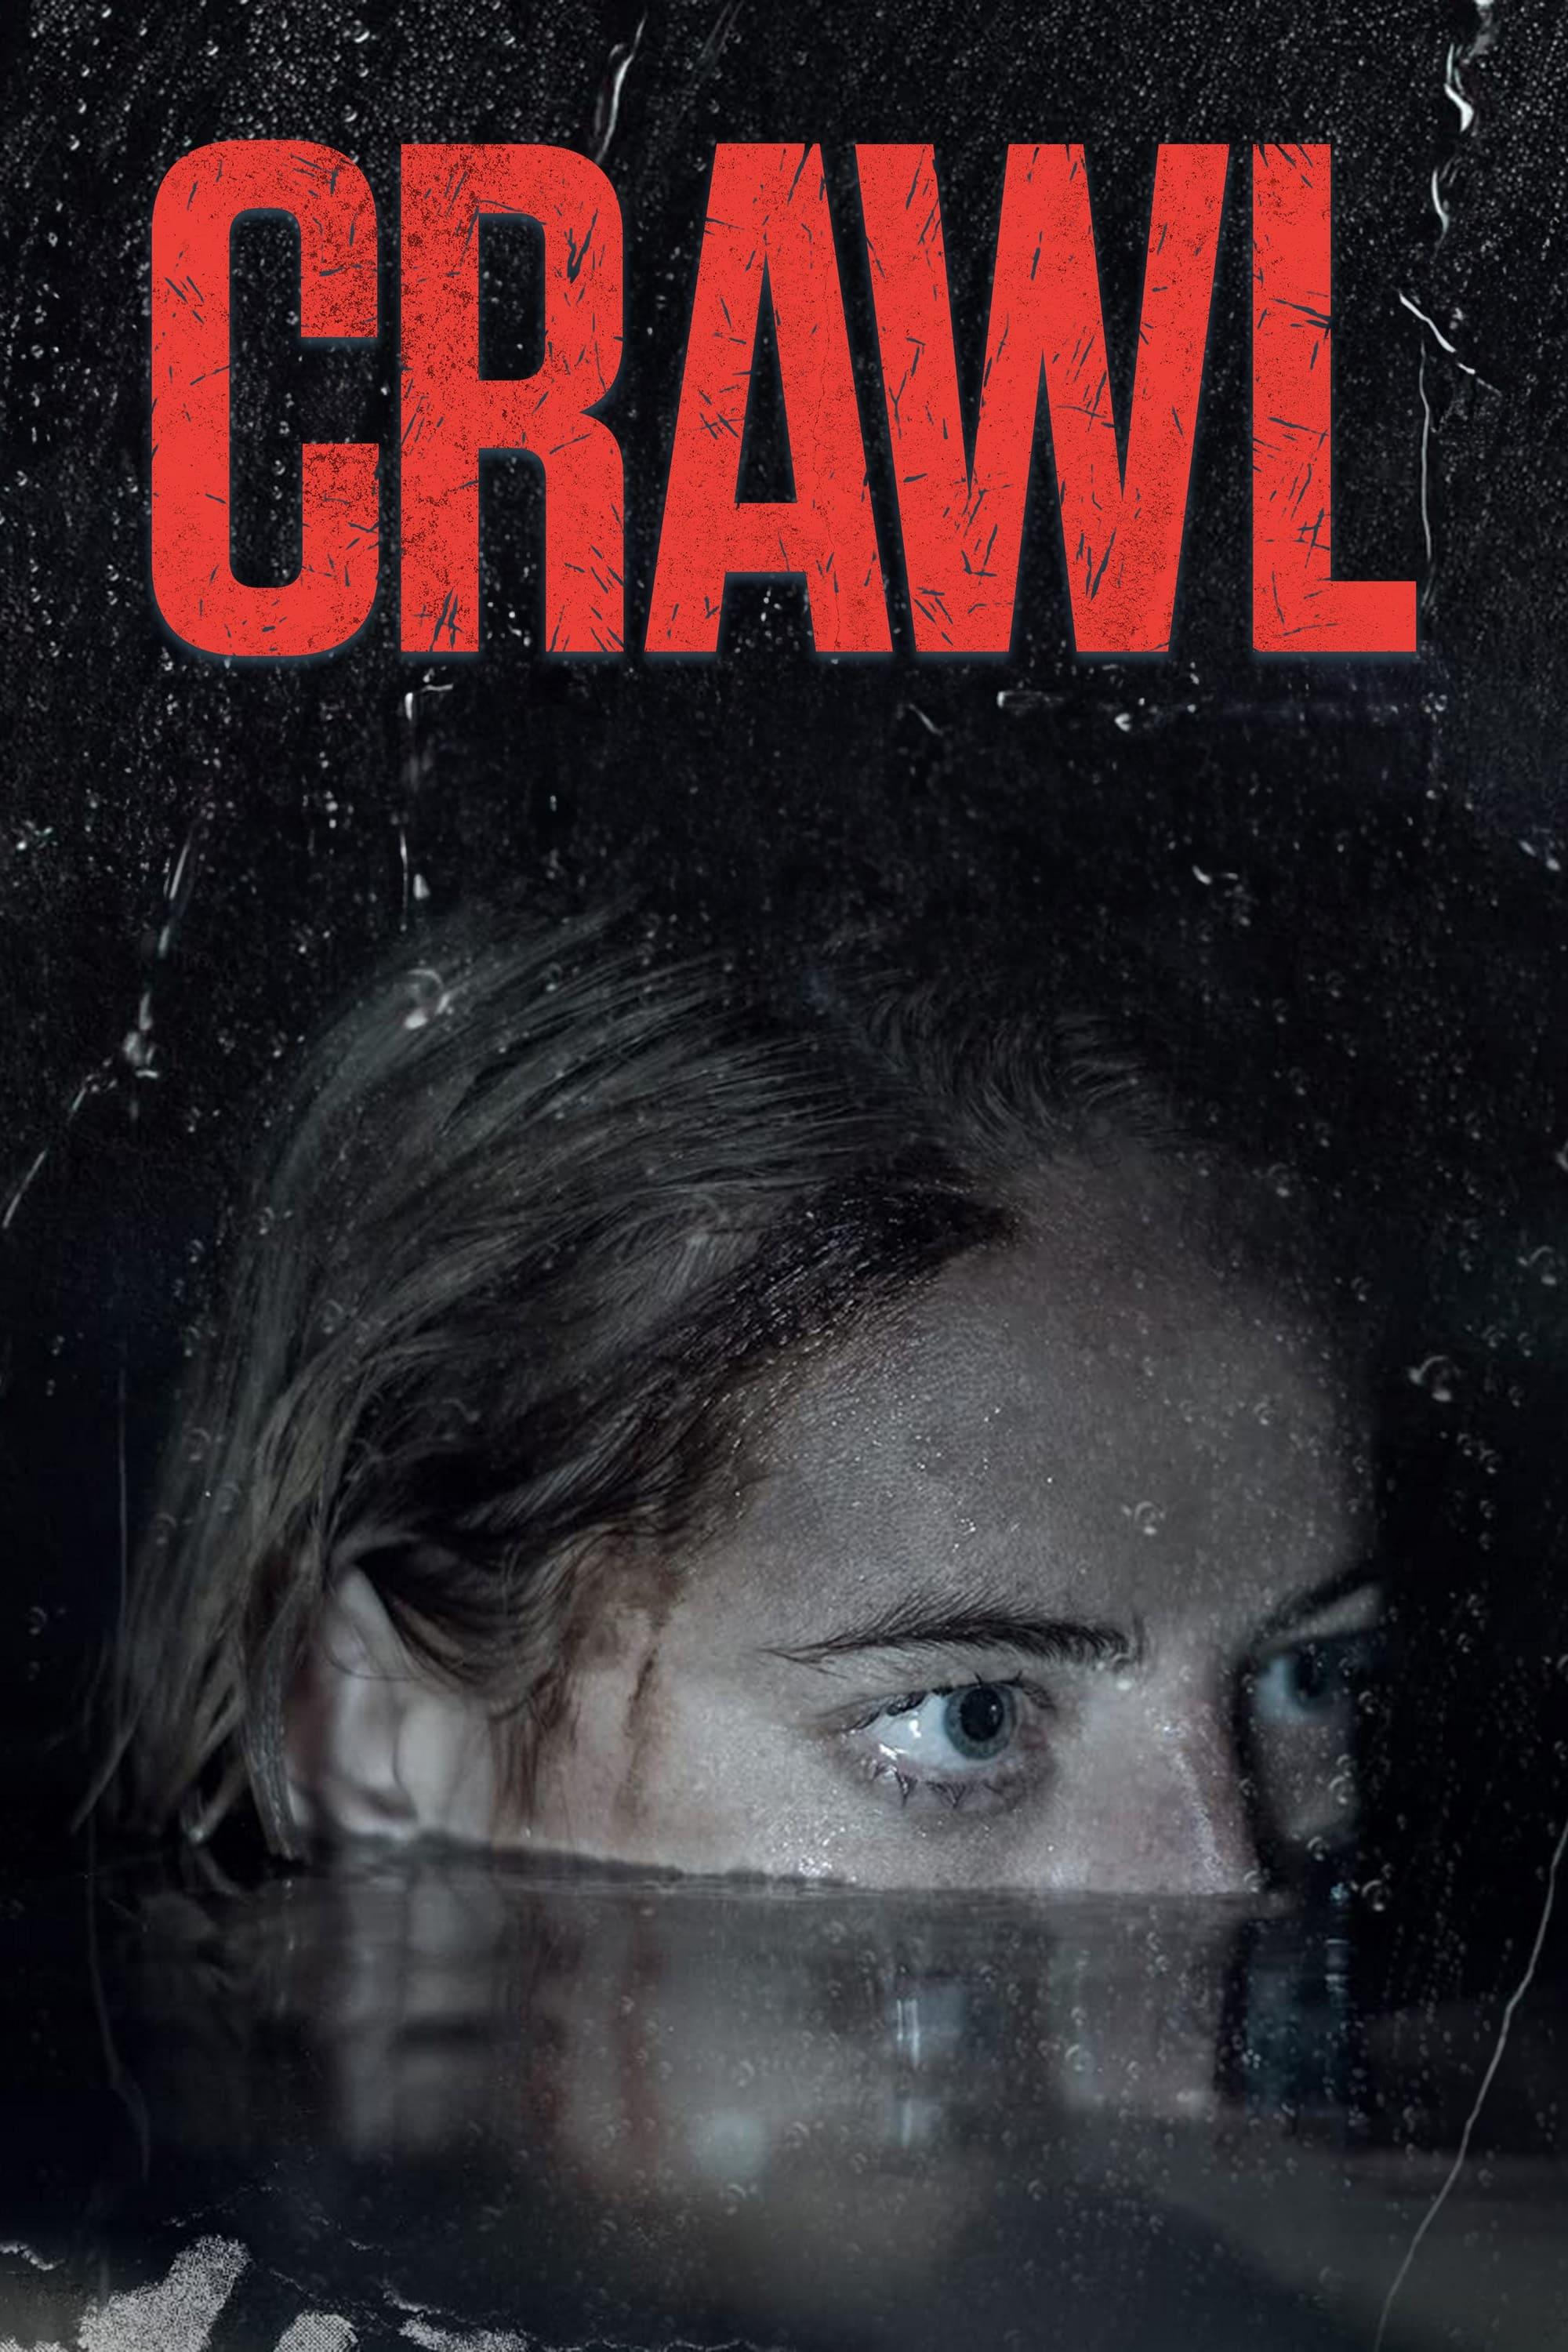 Crawl poster